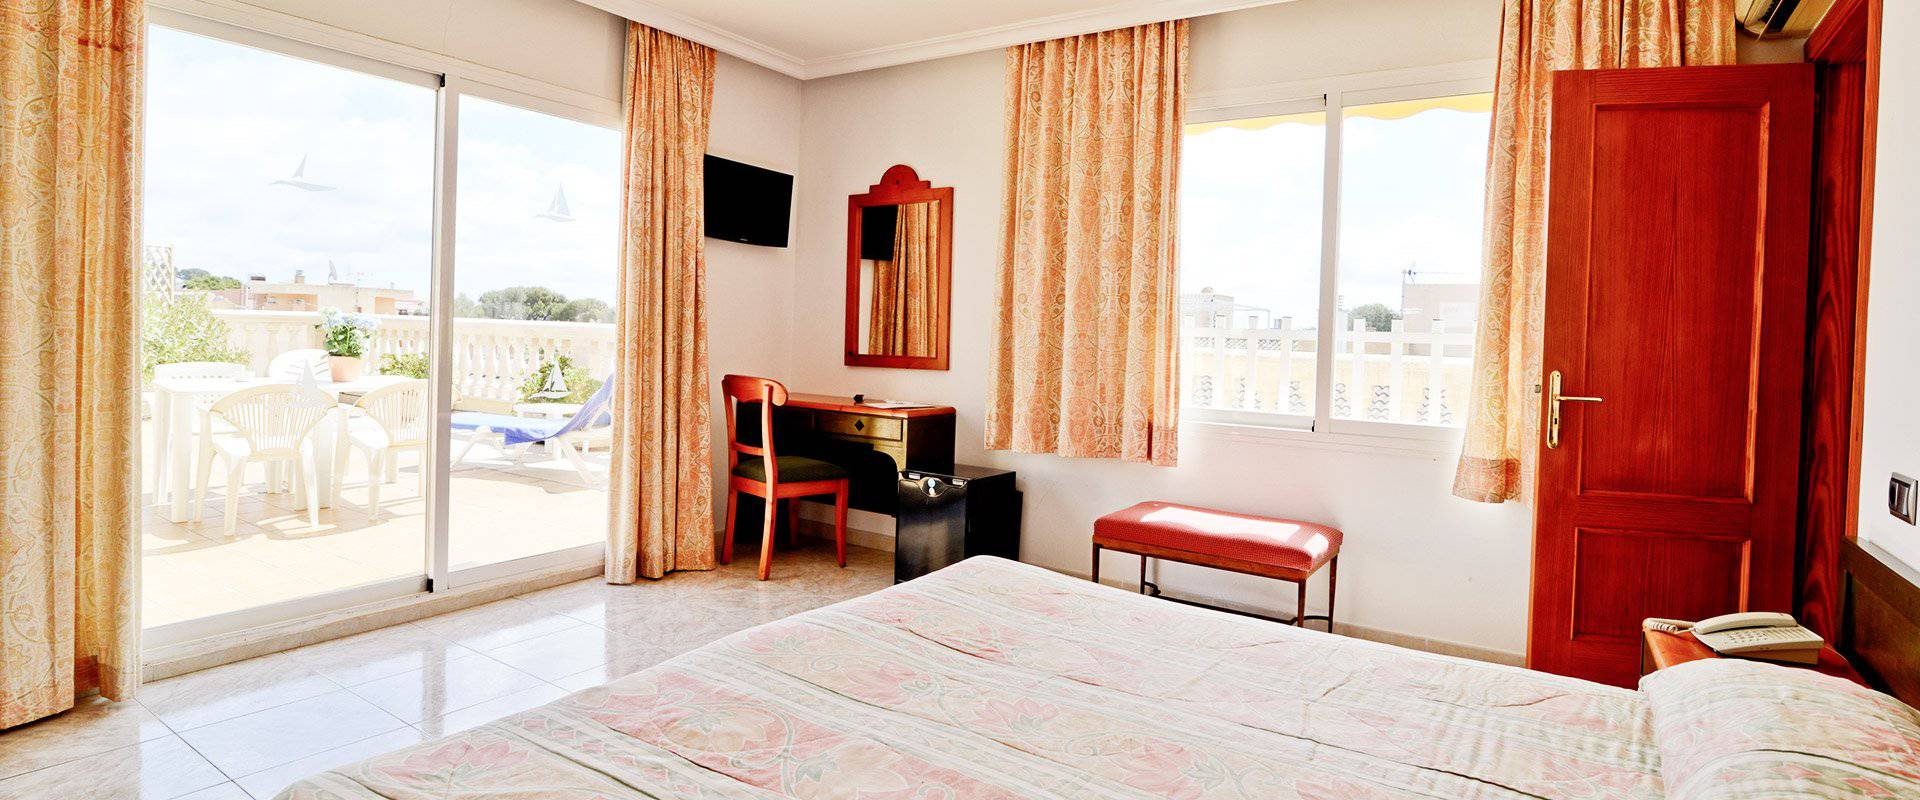 Spacious and comfortable rooms Amorós Hotel Cala Ratjada, Mallorca